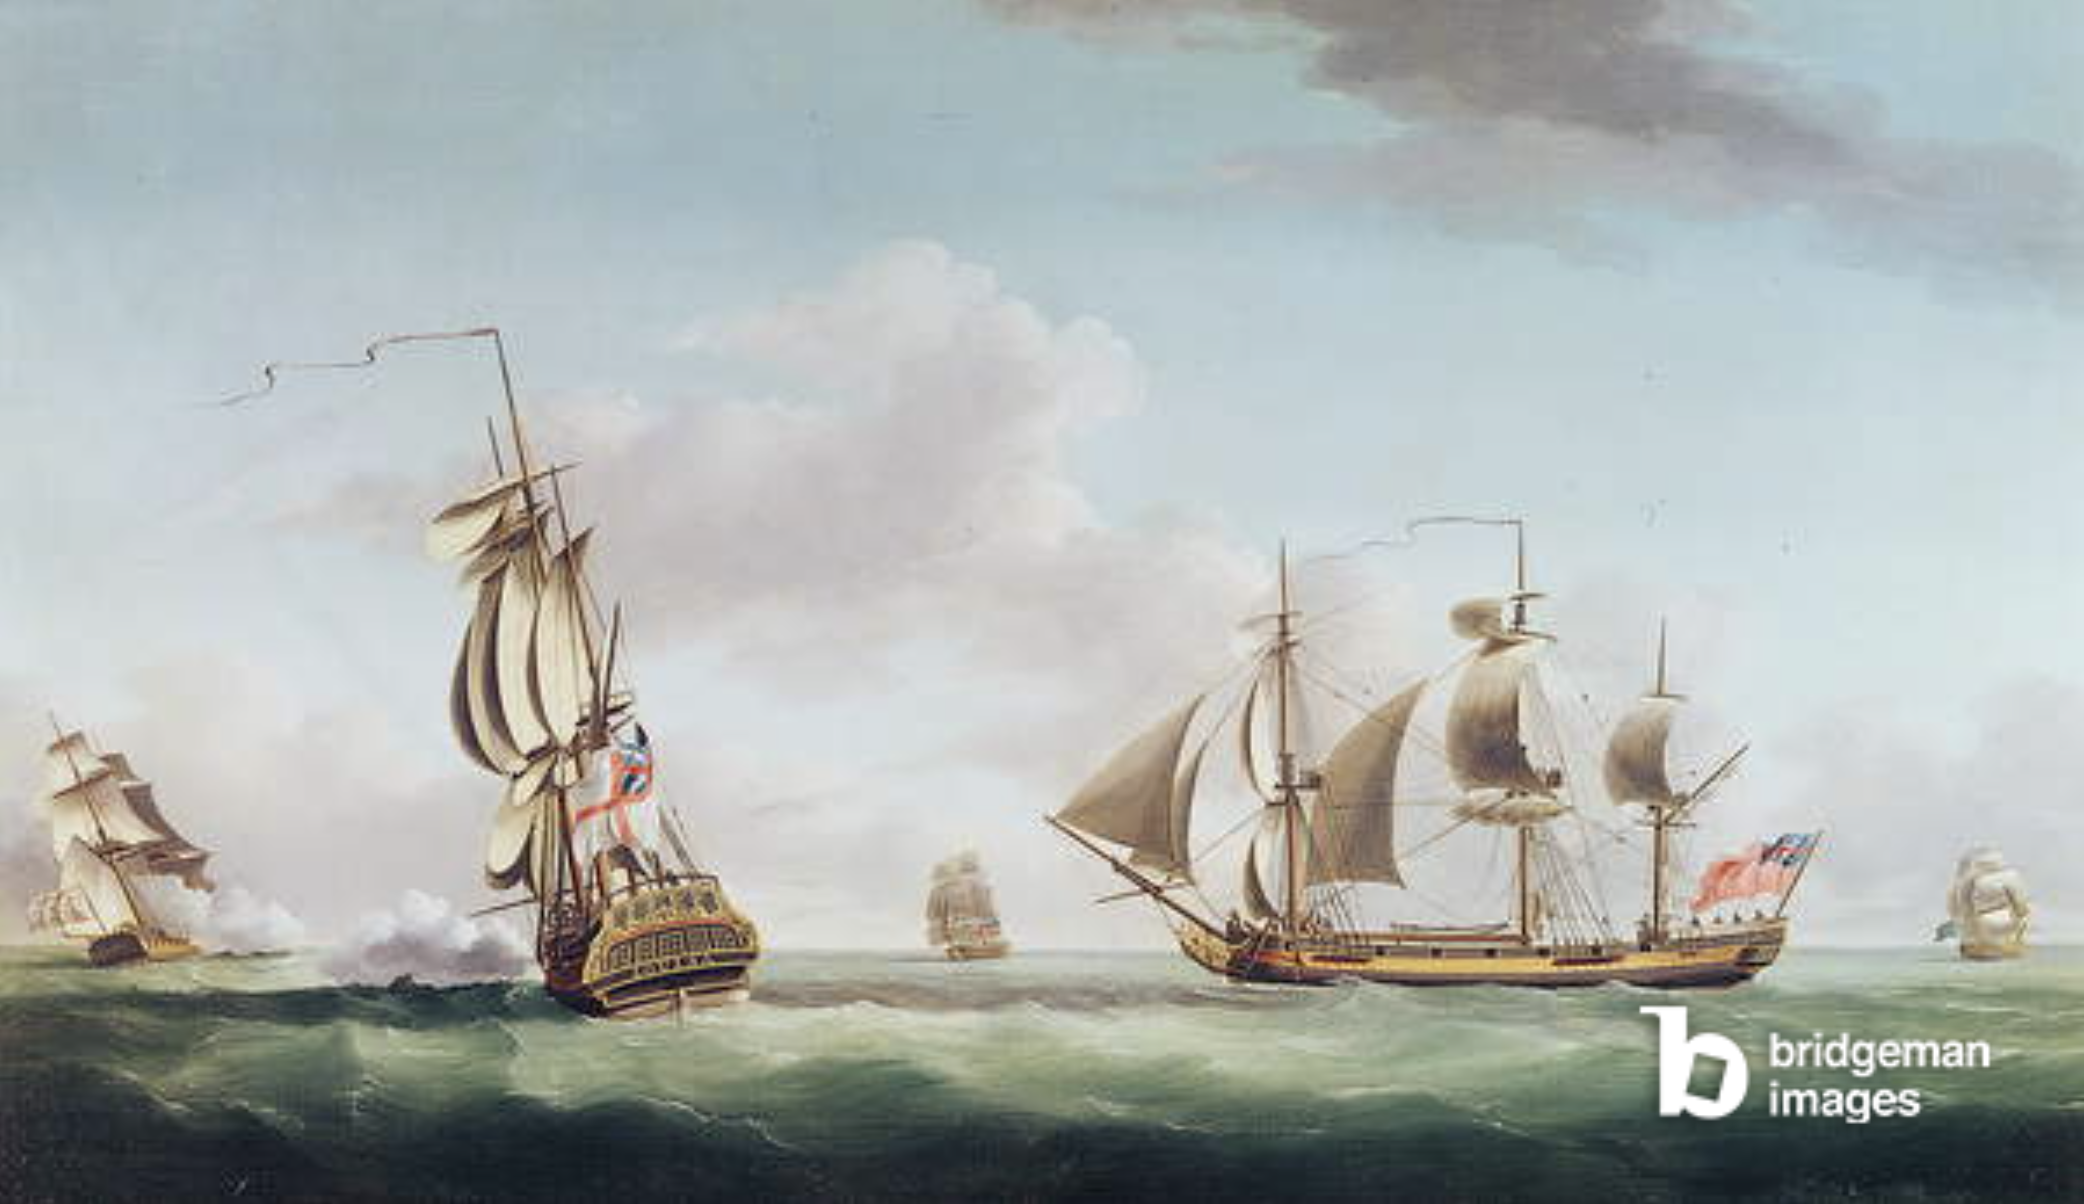 The 'Louisa' engaging the 'Cato', Serres, John Thomas (1759-1825) / National Maritime Museum, London, UK / Bridgeman Images